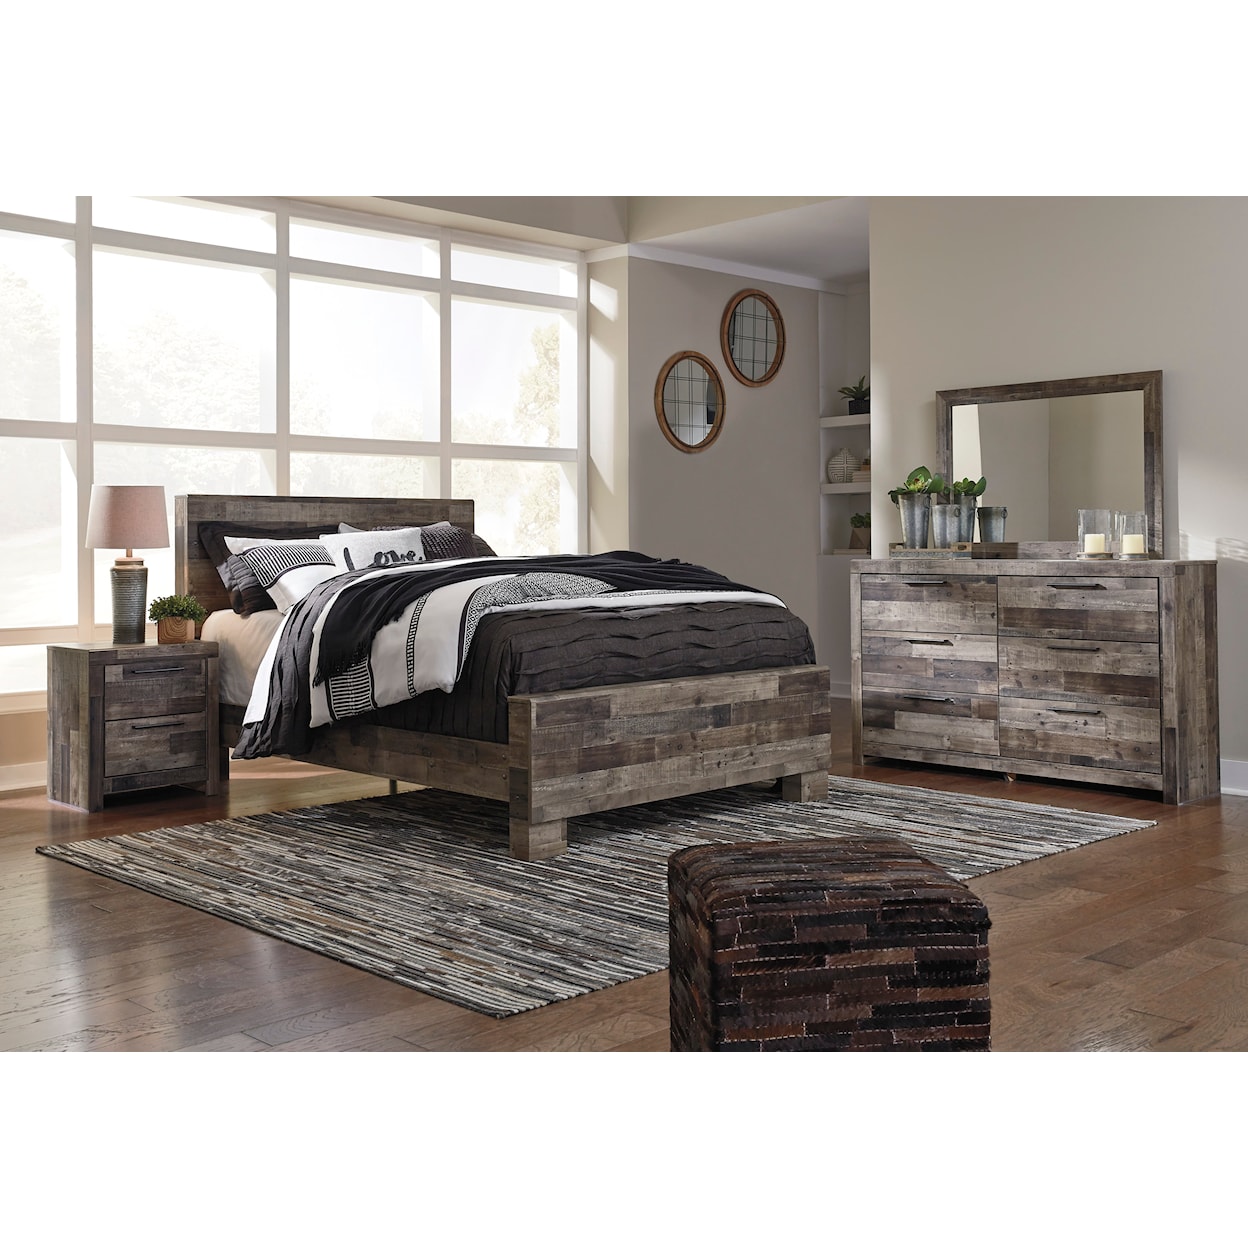 Ashley Furniture Benchcraft Derekson Queen Bedroom Set